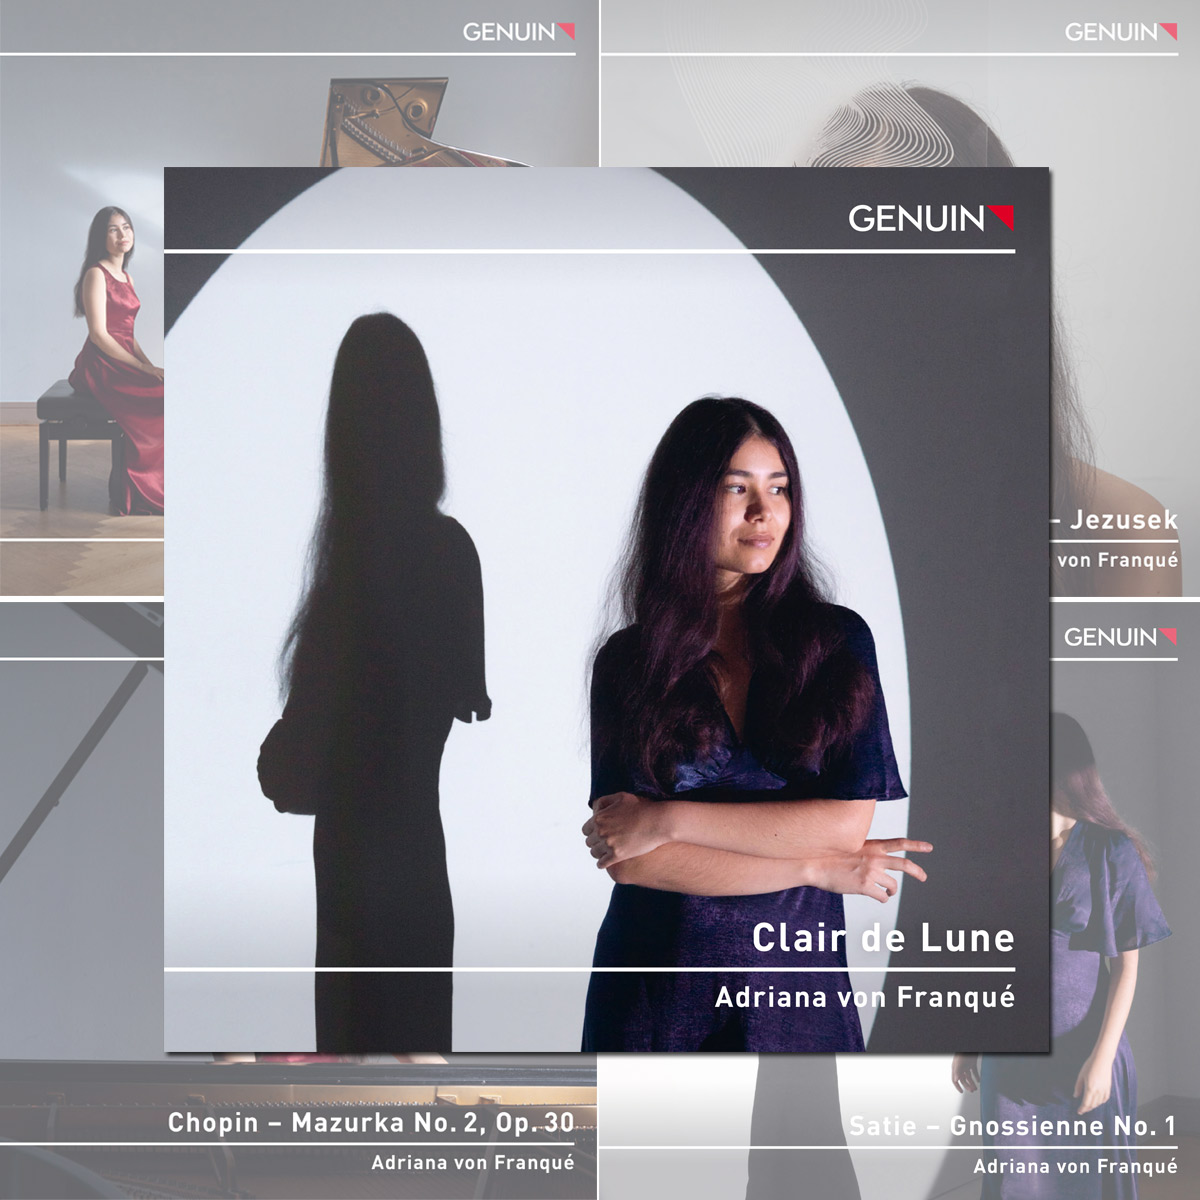 CD album cover 'Clair de Lune' (GEN 24907d) with Adriana von Franqué